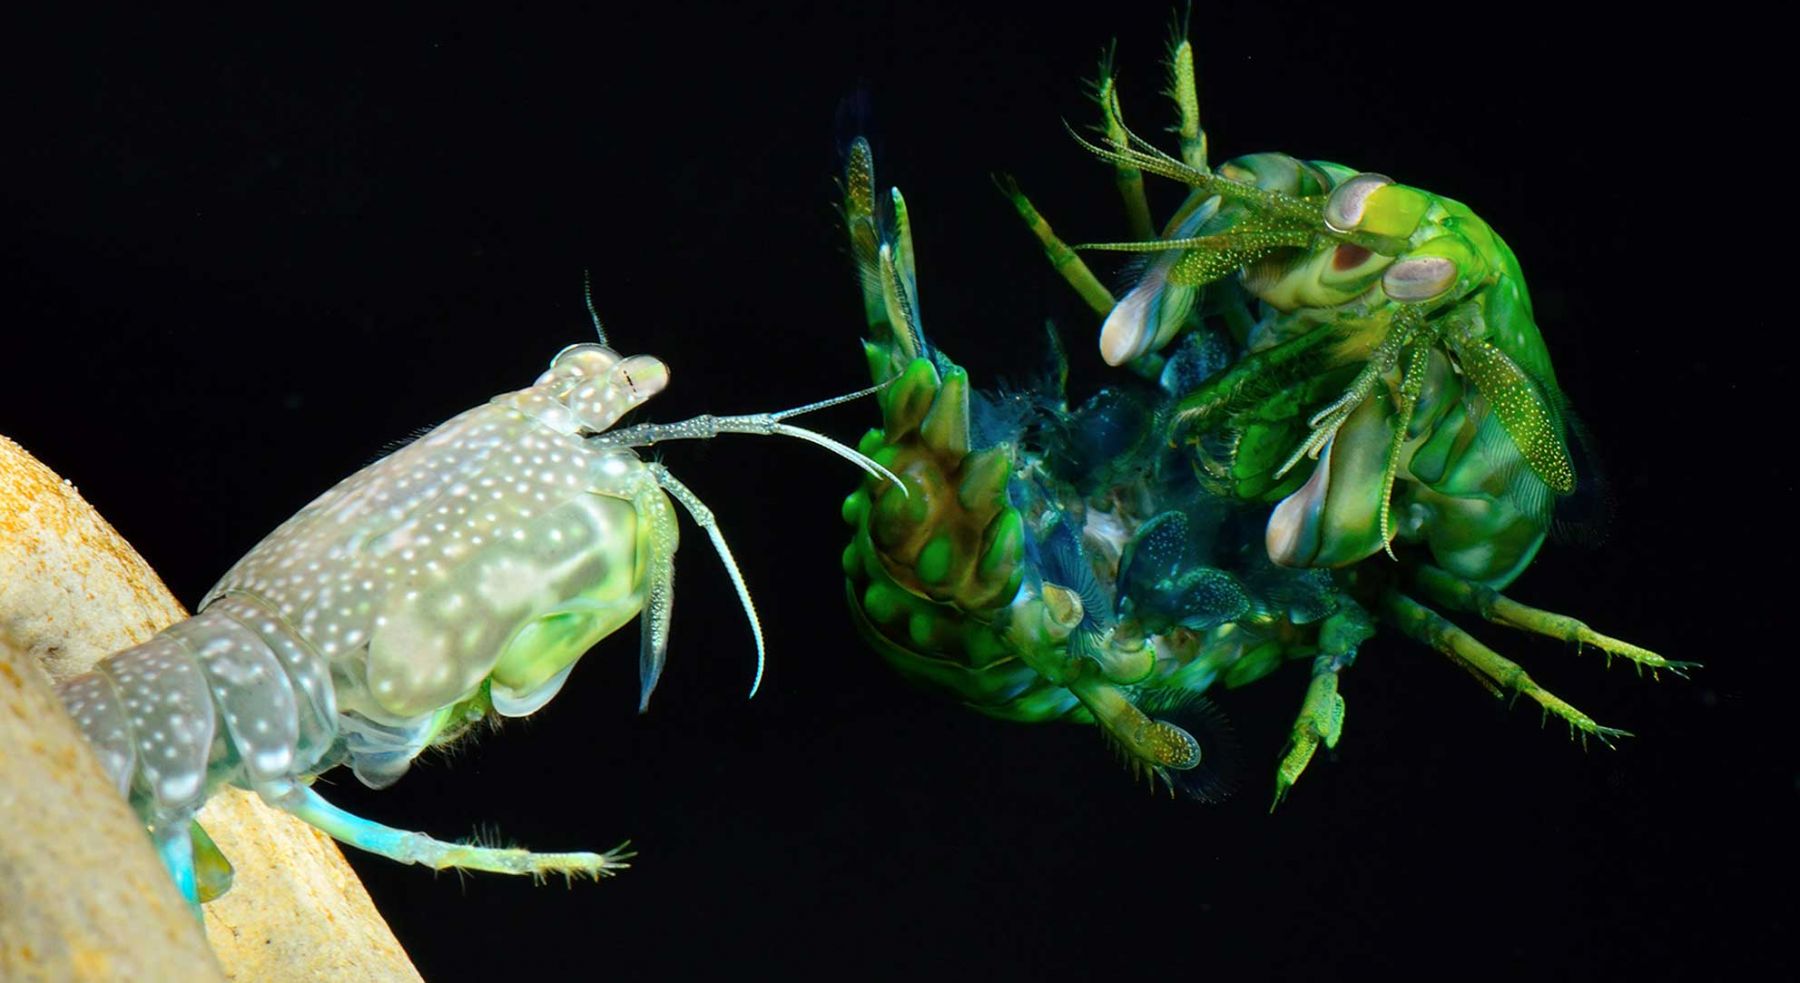 Mantis shrimp fighting. Credit: Roy Caldwell